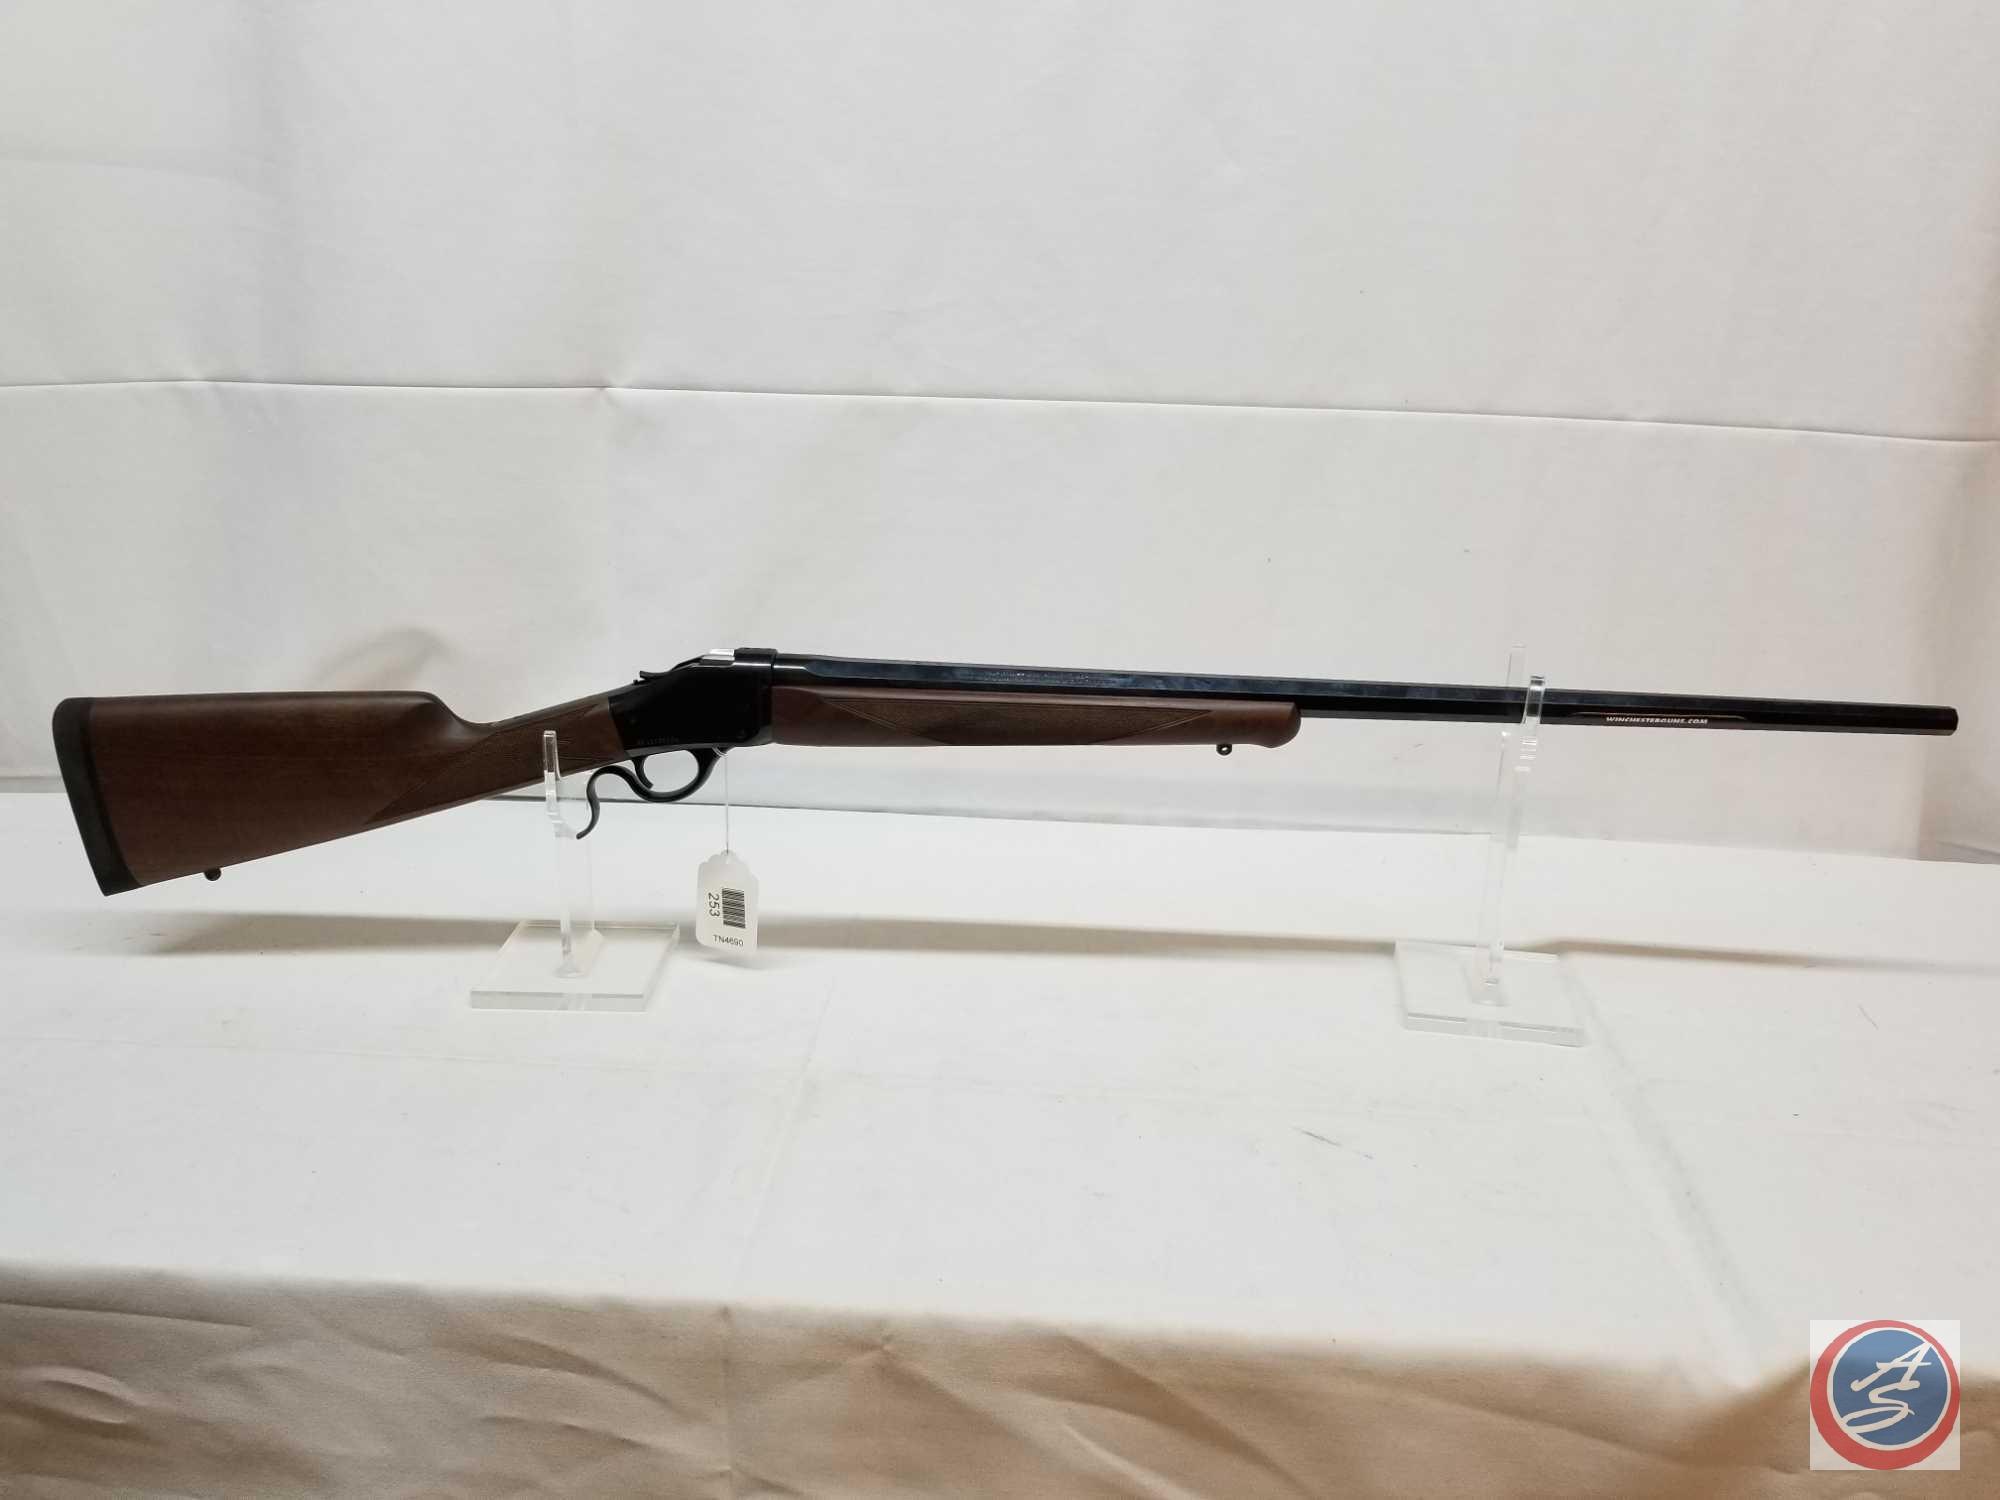 Henry Model 1895 6.5 Creedmore Rifle SINGLE SHOT Fallin Block Rifle New in Box Ser # 00170ZR85K